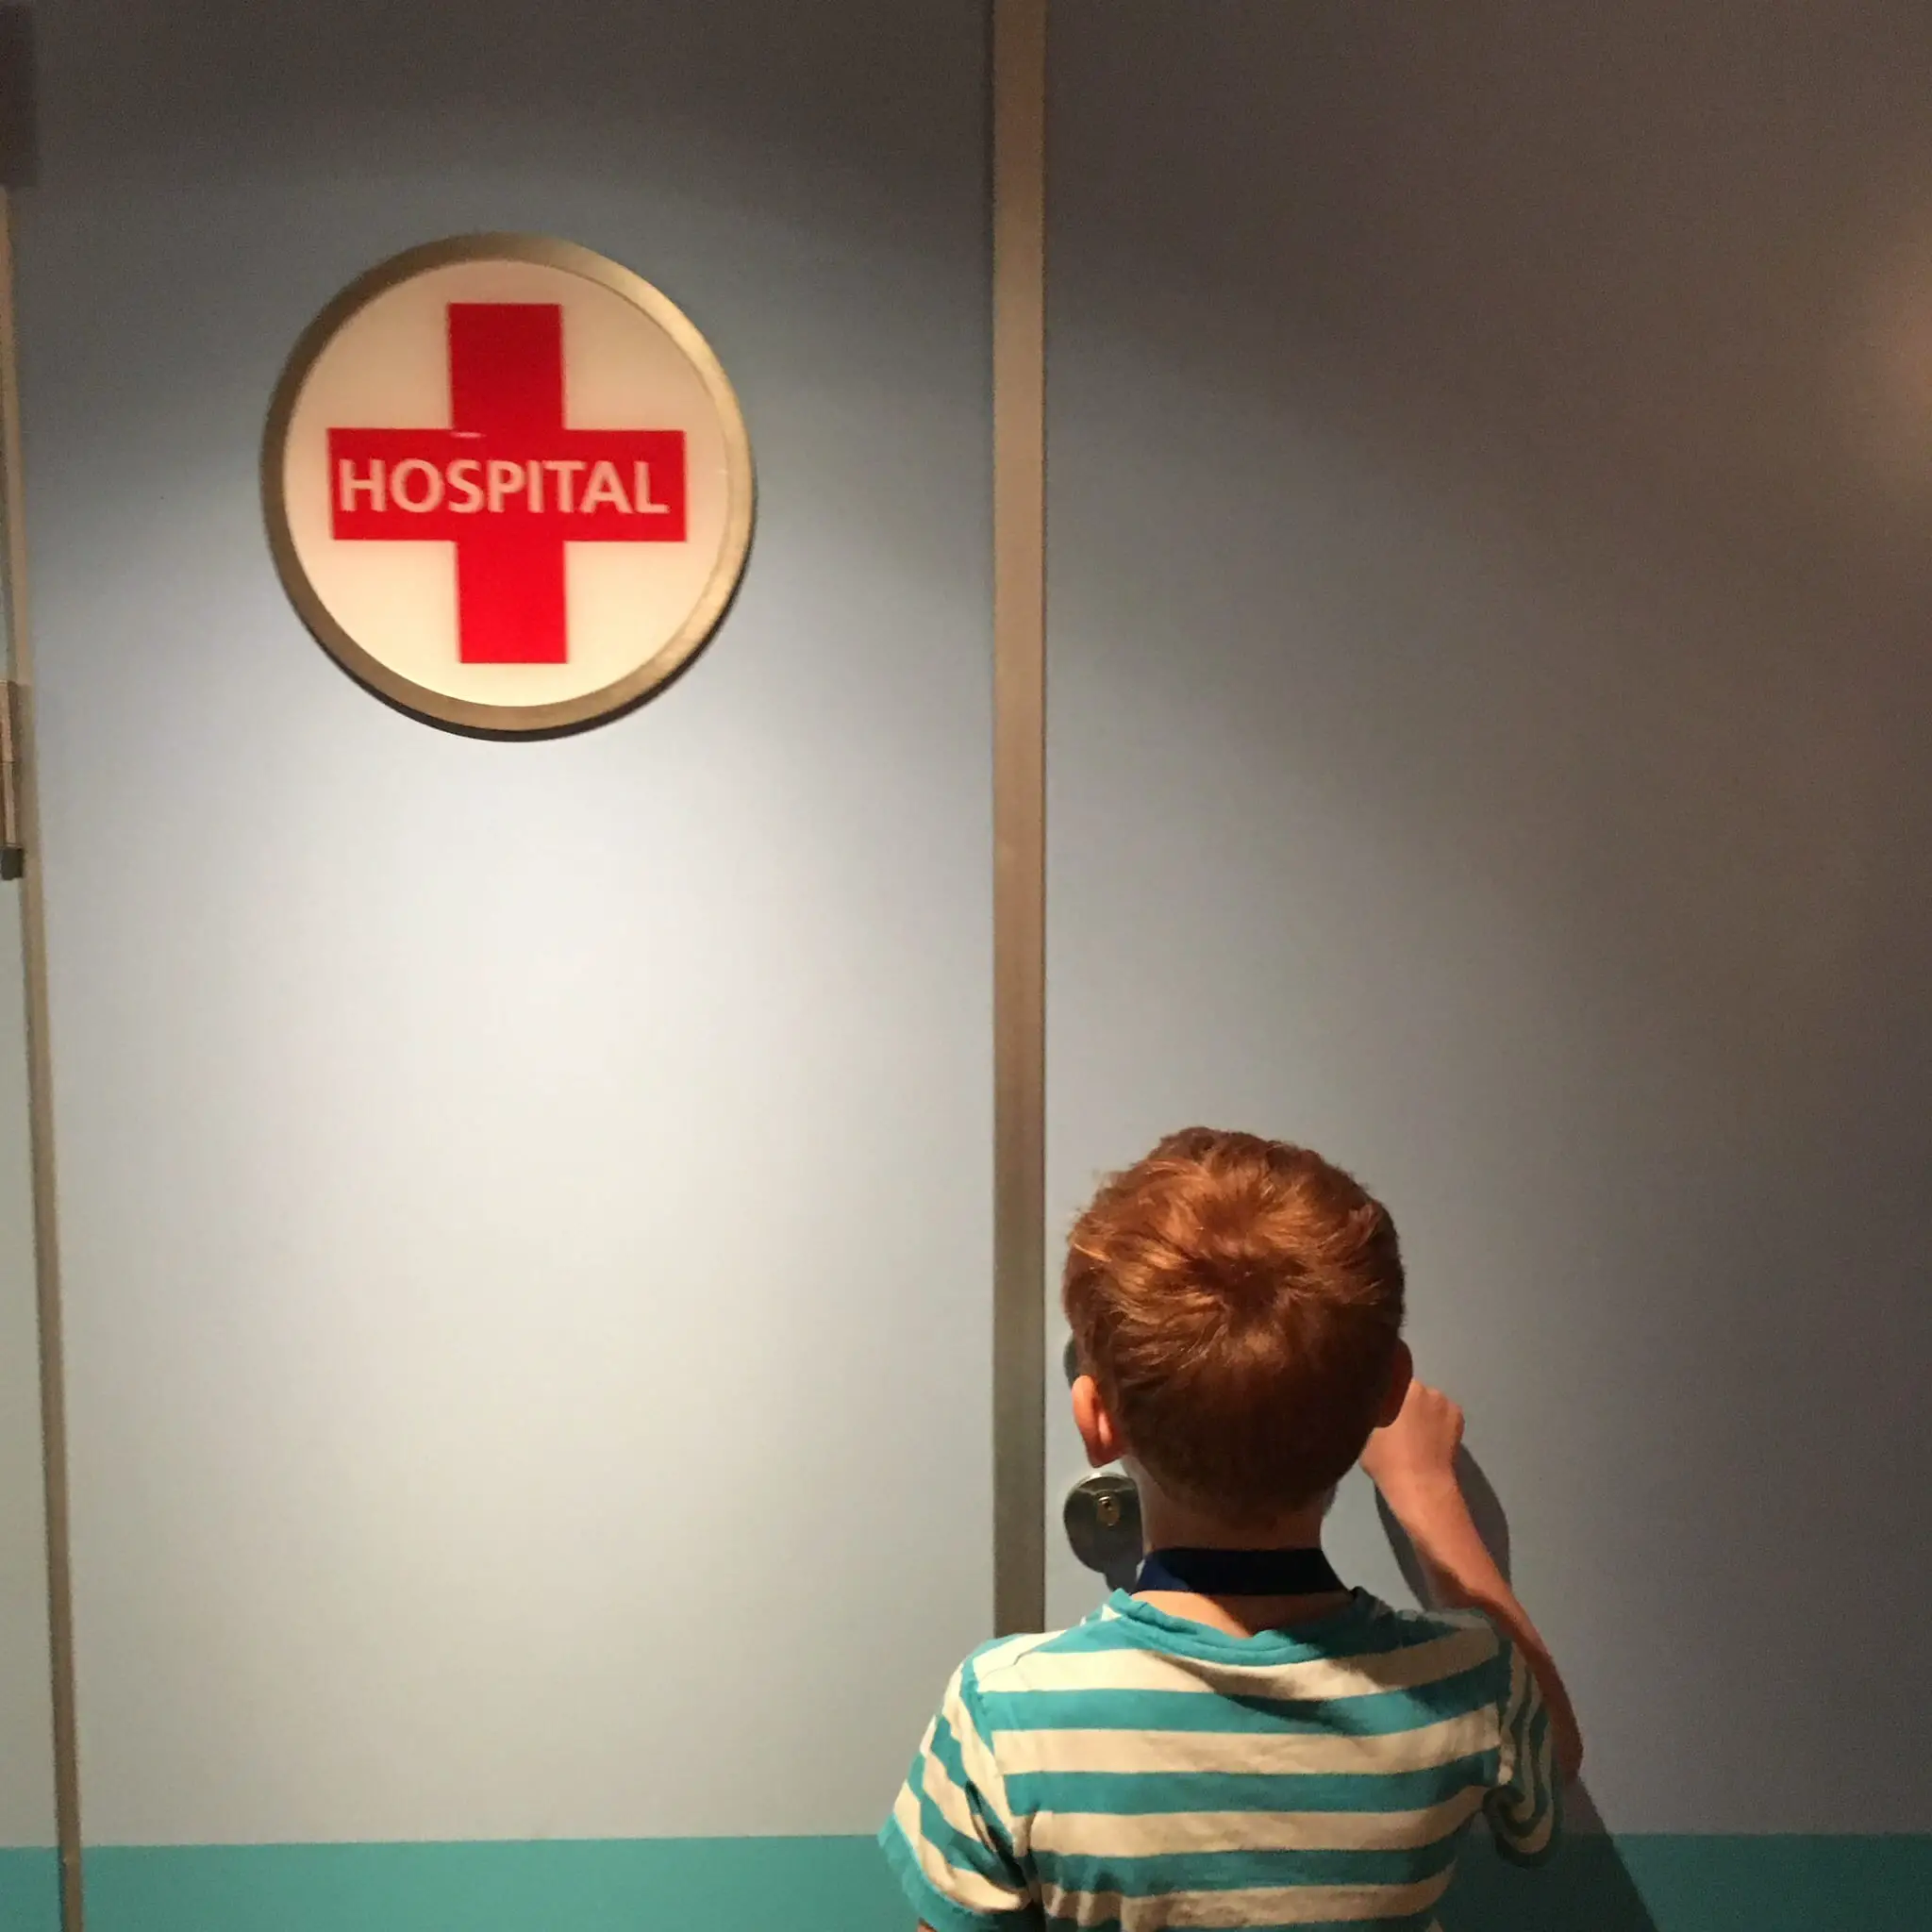 Krankes Kind auf Kreuzfahrt vor Hospital